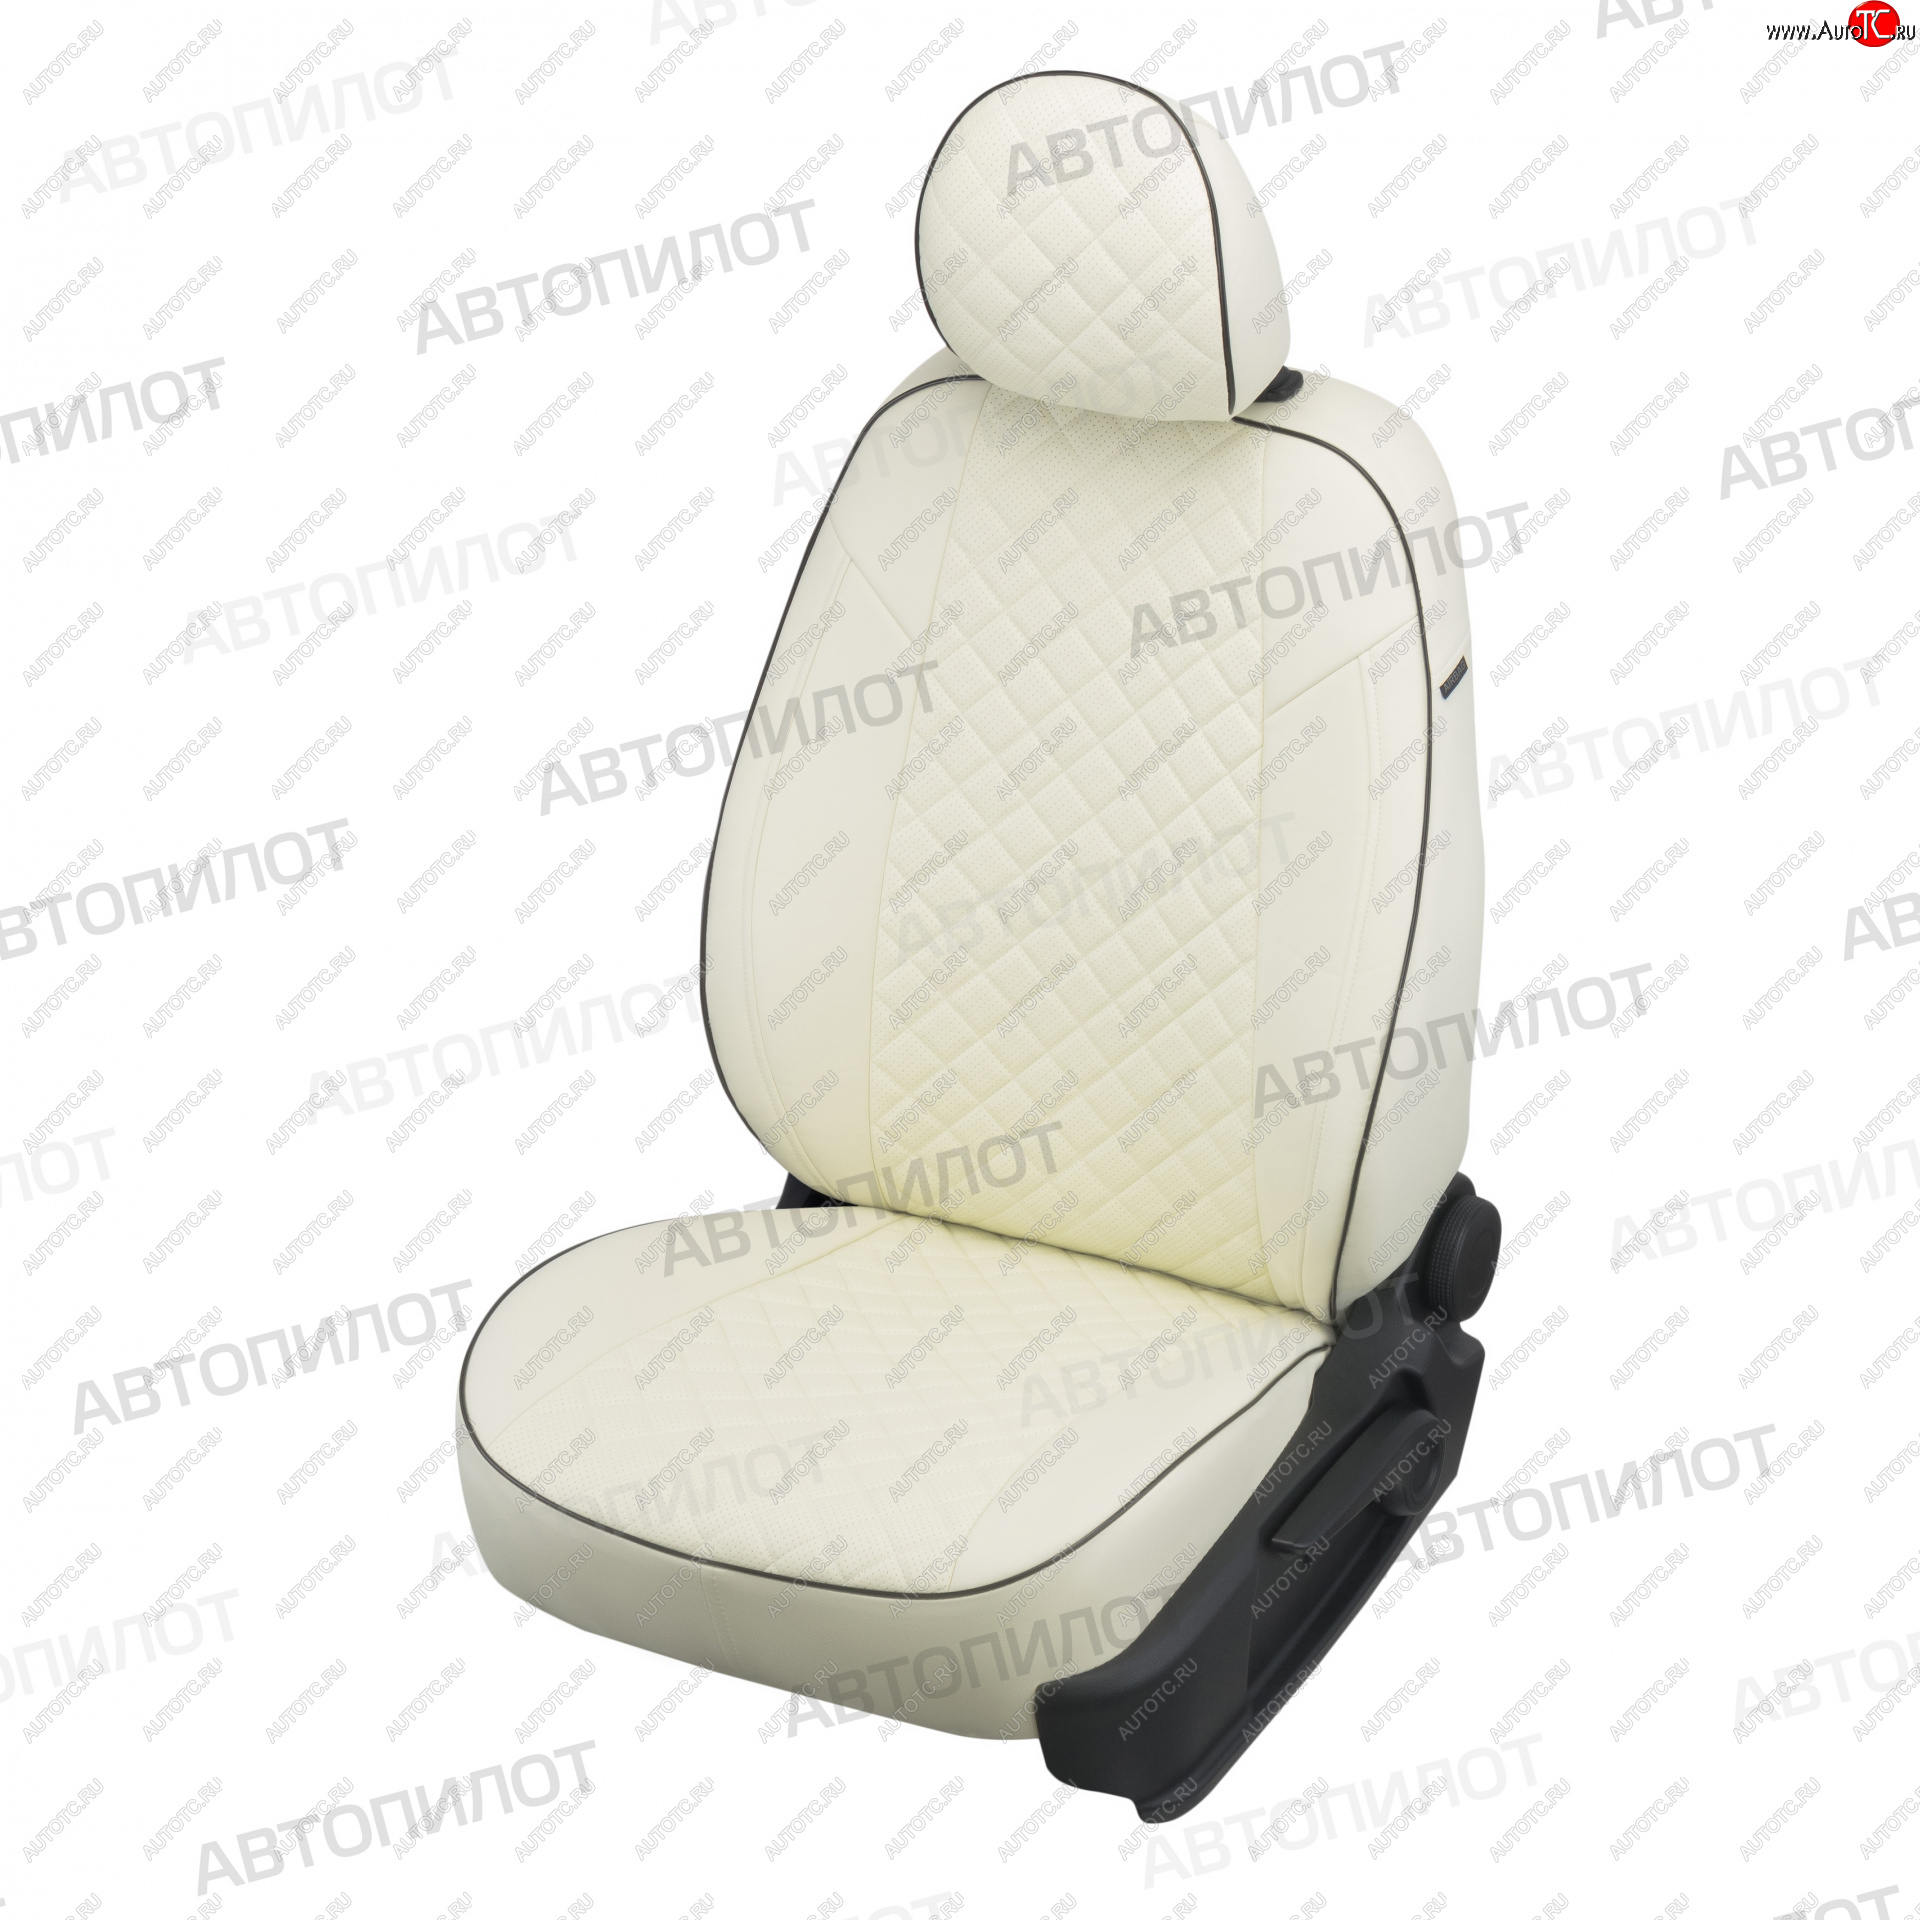 13 999 р. Чехлы сидений (экокожа) Автопилот Ромб  Hyundai Sonata  EF (2001-2013), KIA Magentis (2000-2005) (белый)